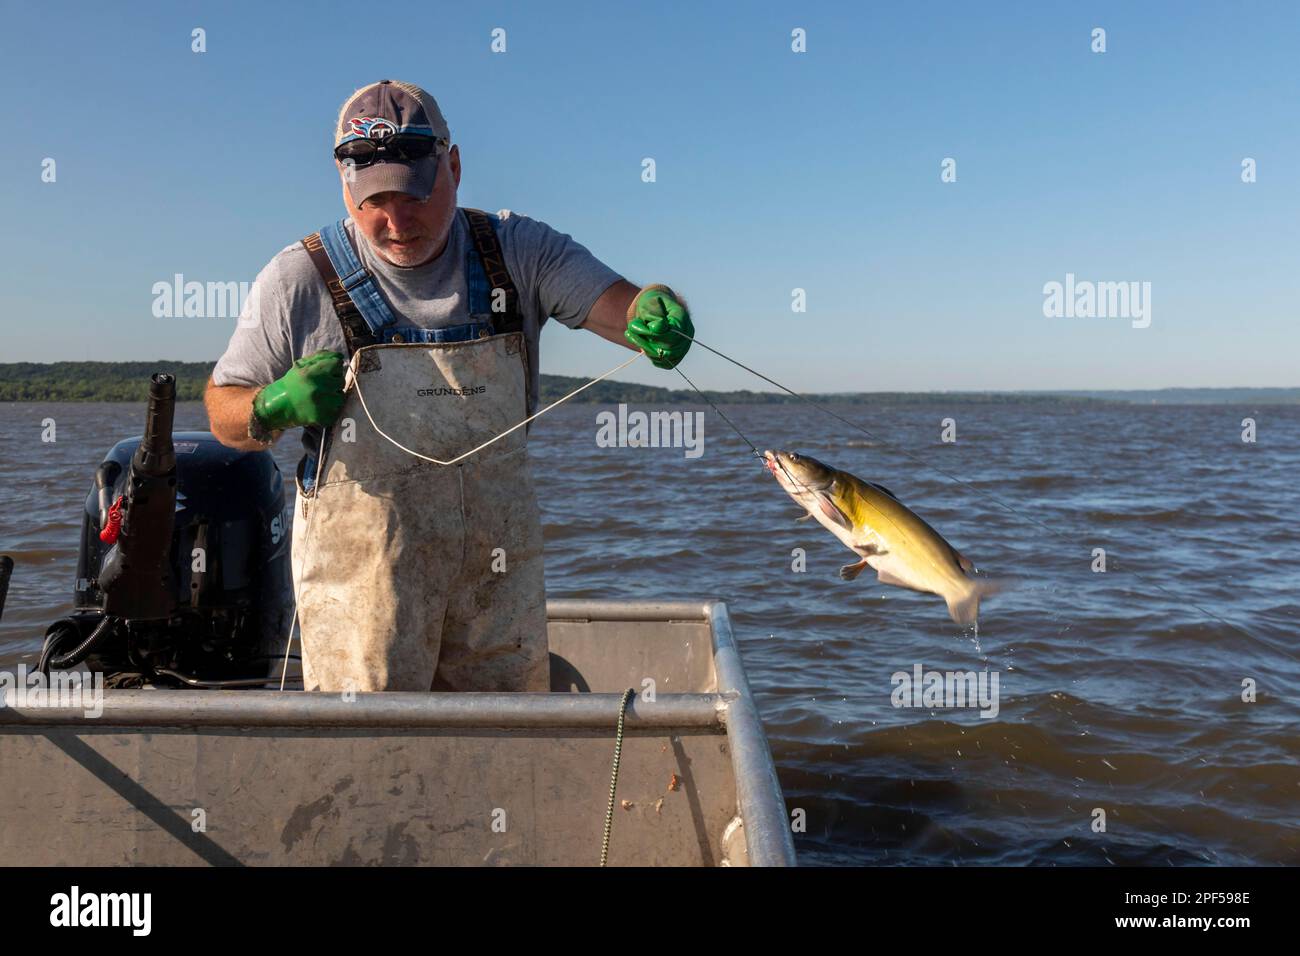 Peoria, Illinois, Dave Buchanan fishes for catfish on the Illinois